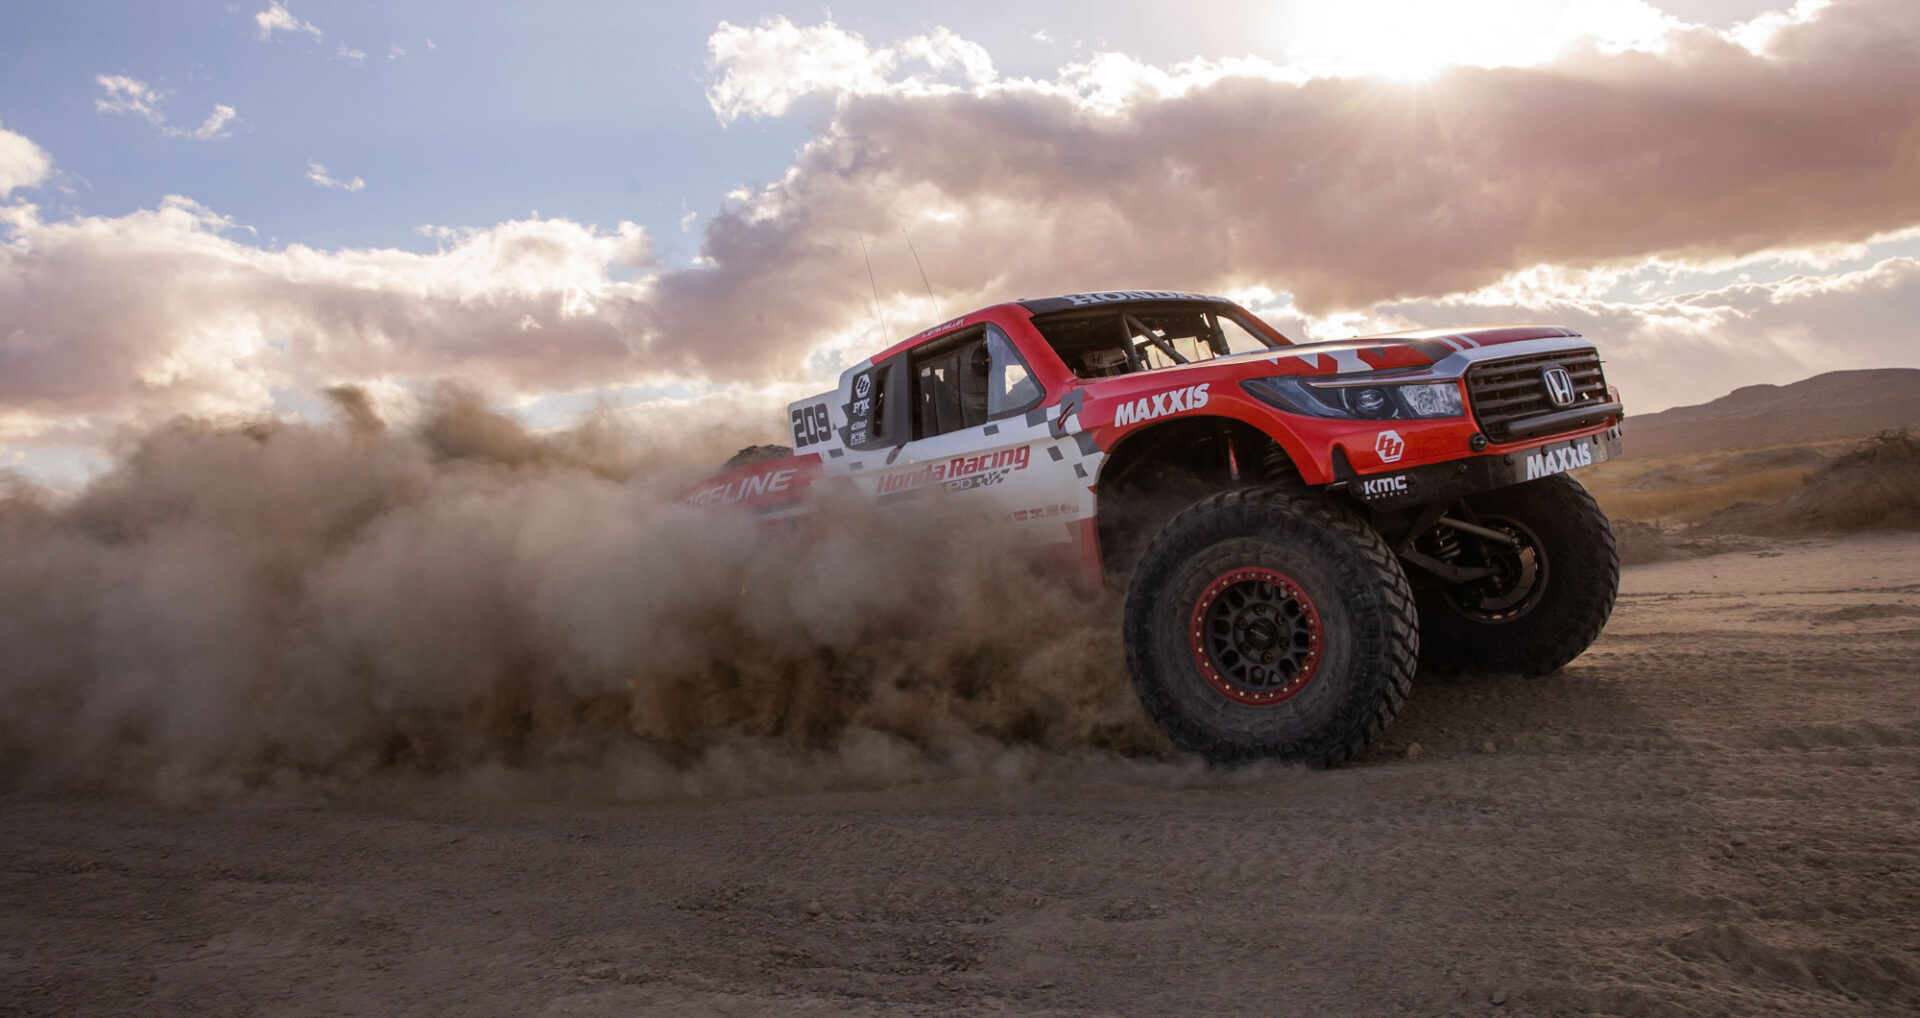 Jeff Proctor race team kicking up dust in a desert race.